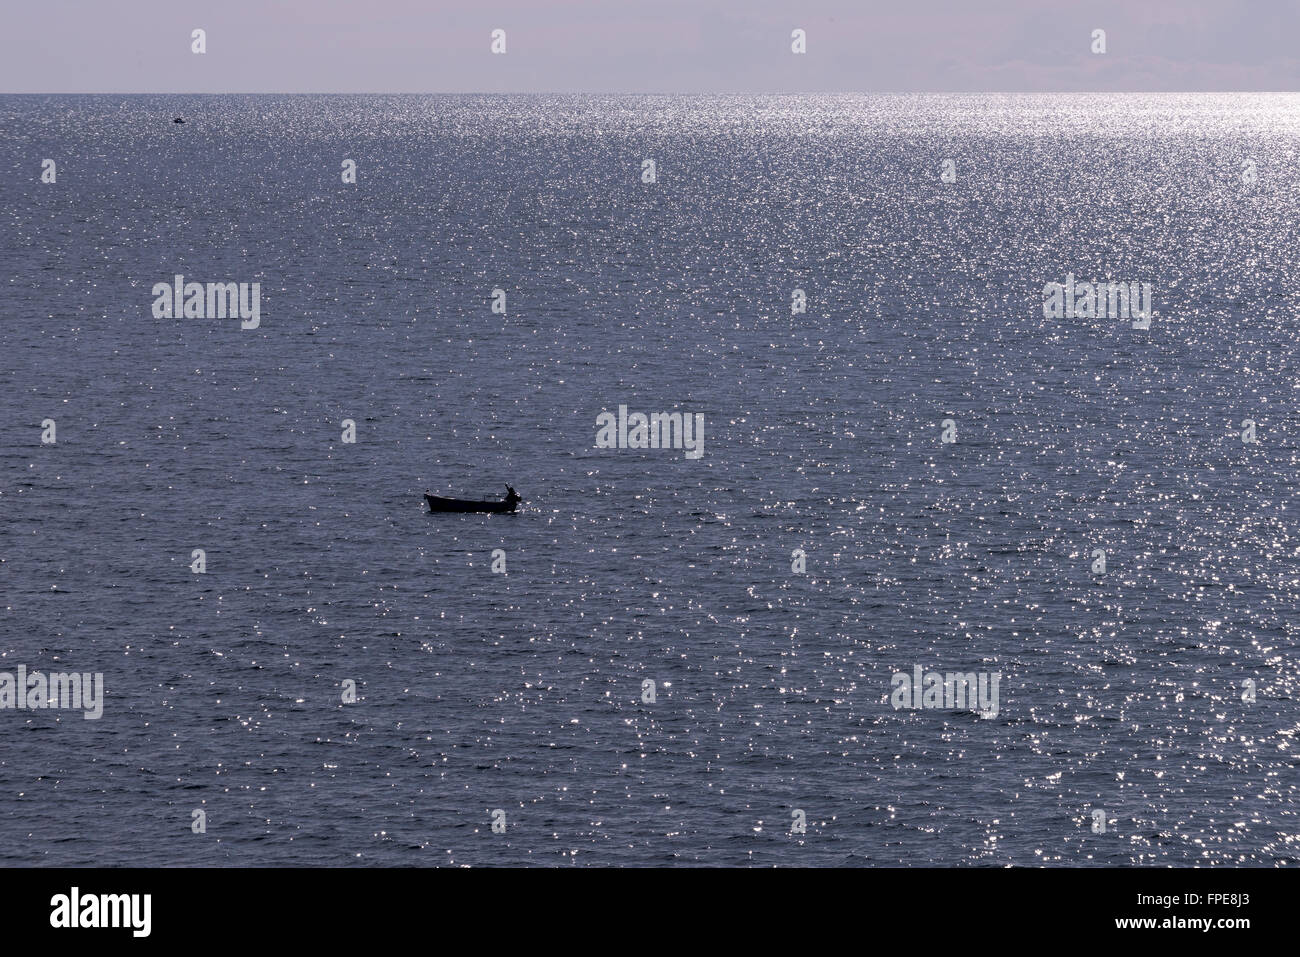 A lone fisherman on a sparkling Adriatic Sea, near Dubrovnik, Croatia. Stock Photo